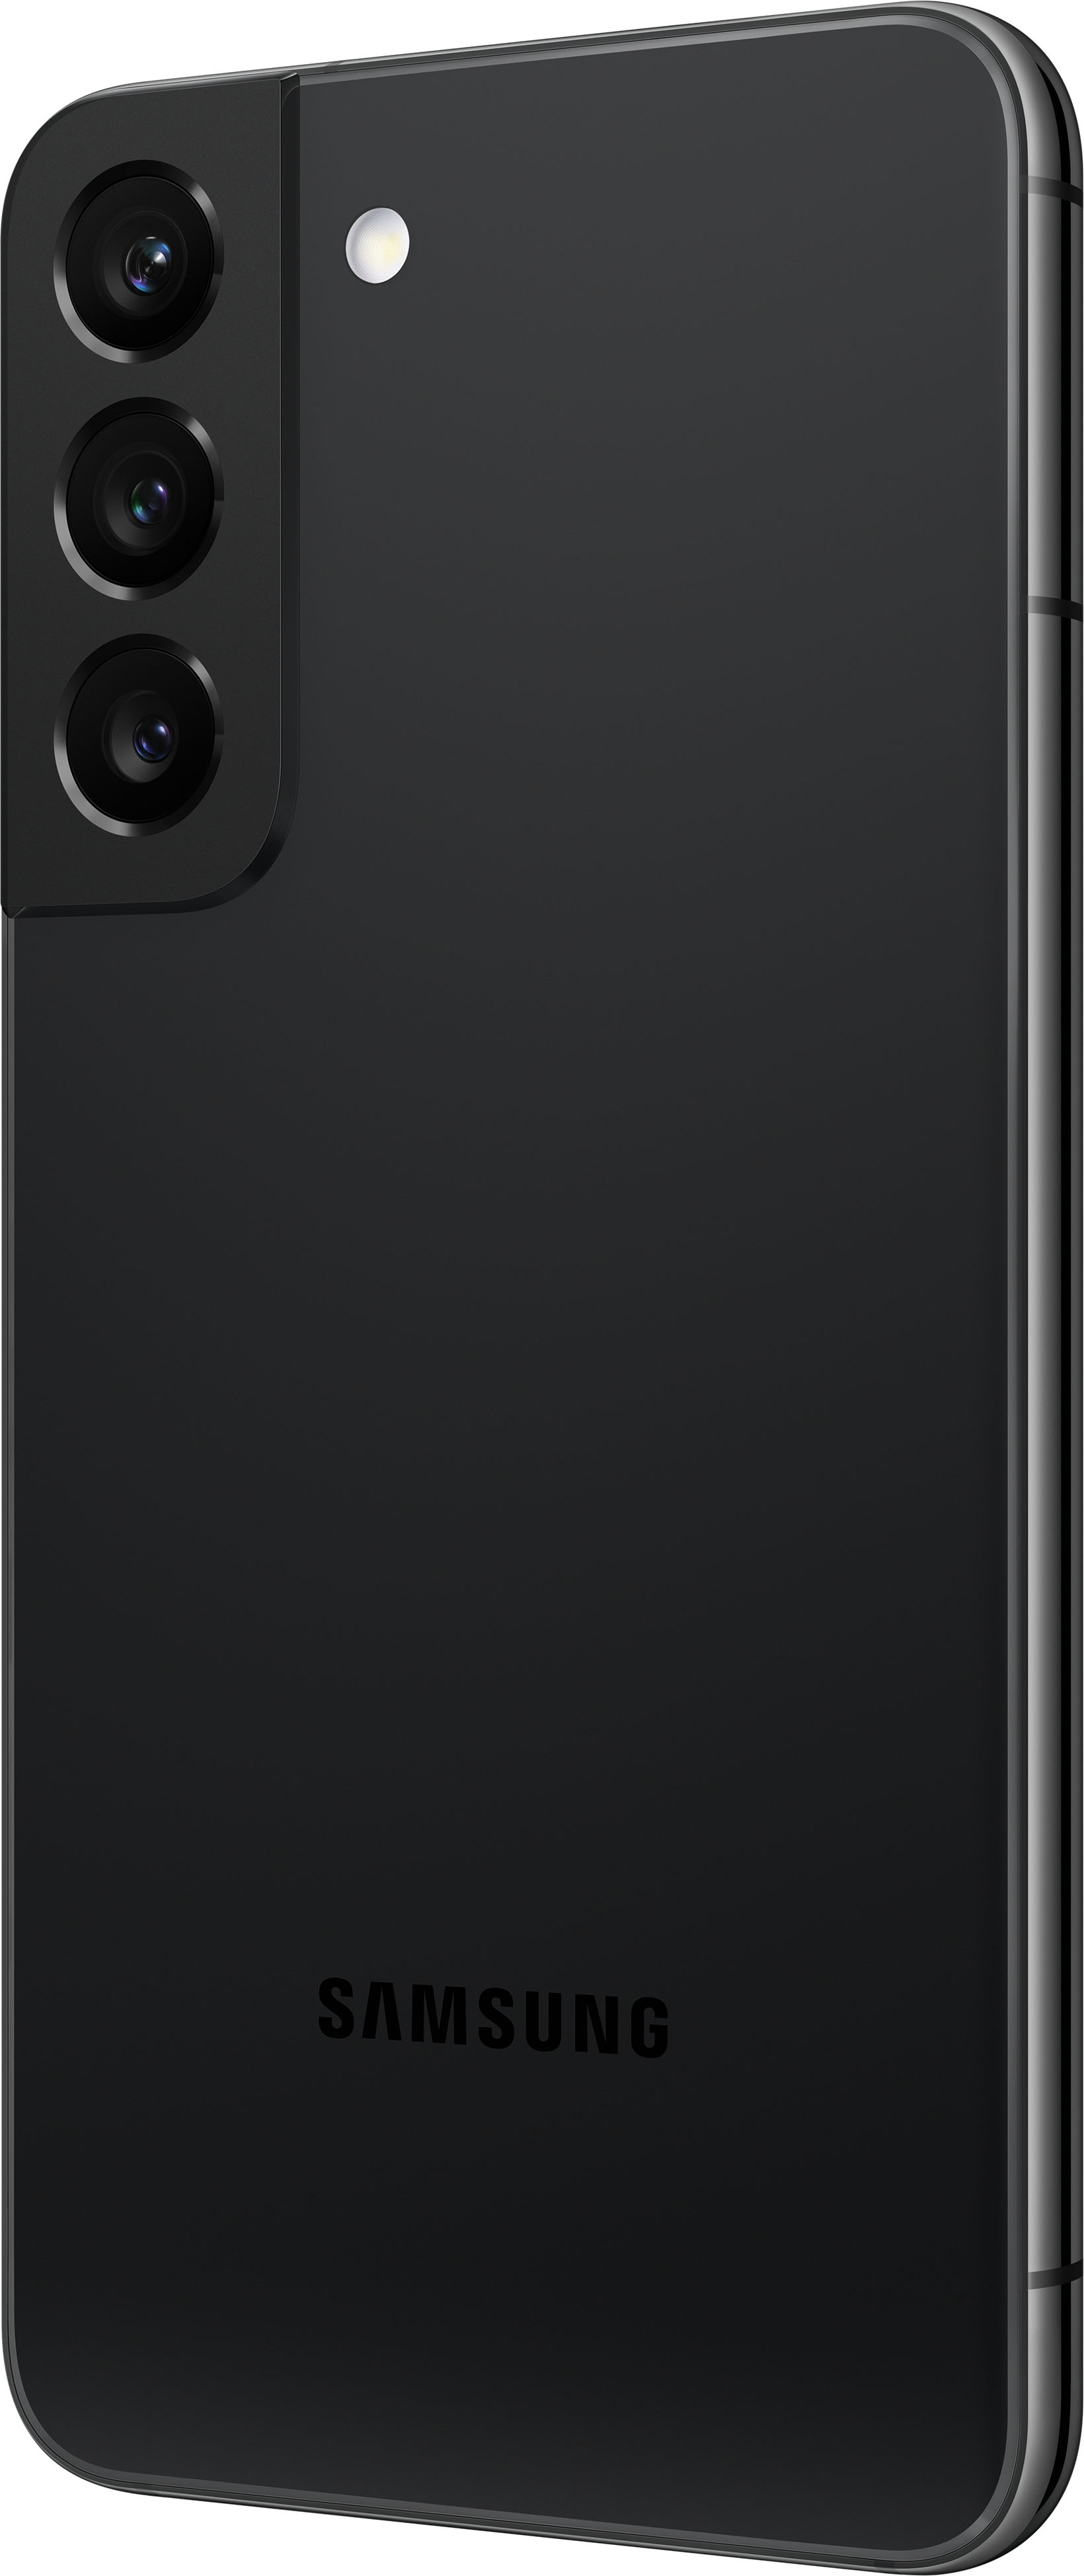 Samsung Galaxy S22 5G 128/256GB Sm-s901u1 Unlocked Cell Phones All Colors - Good Condition, Black